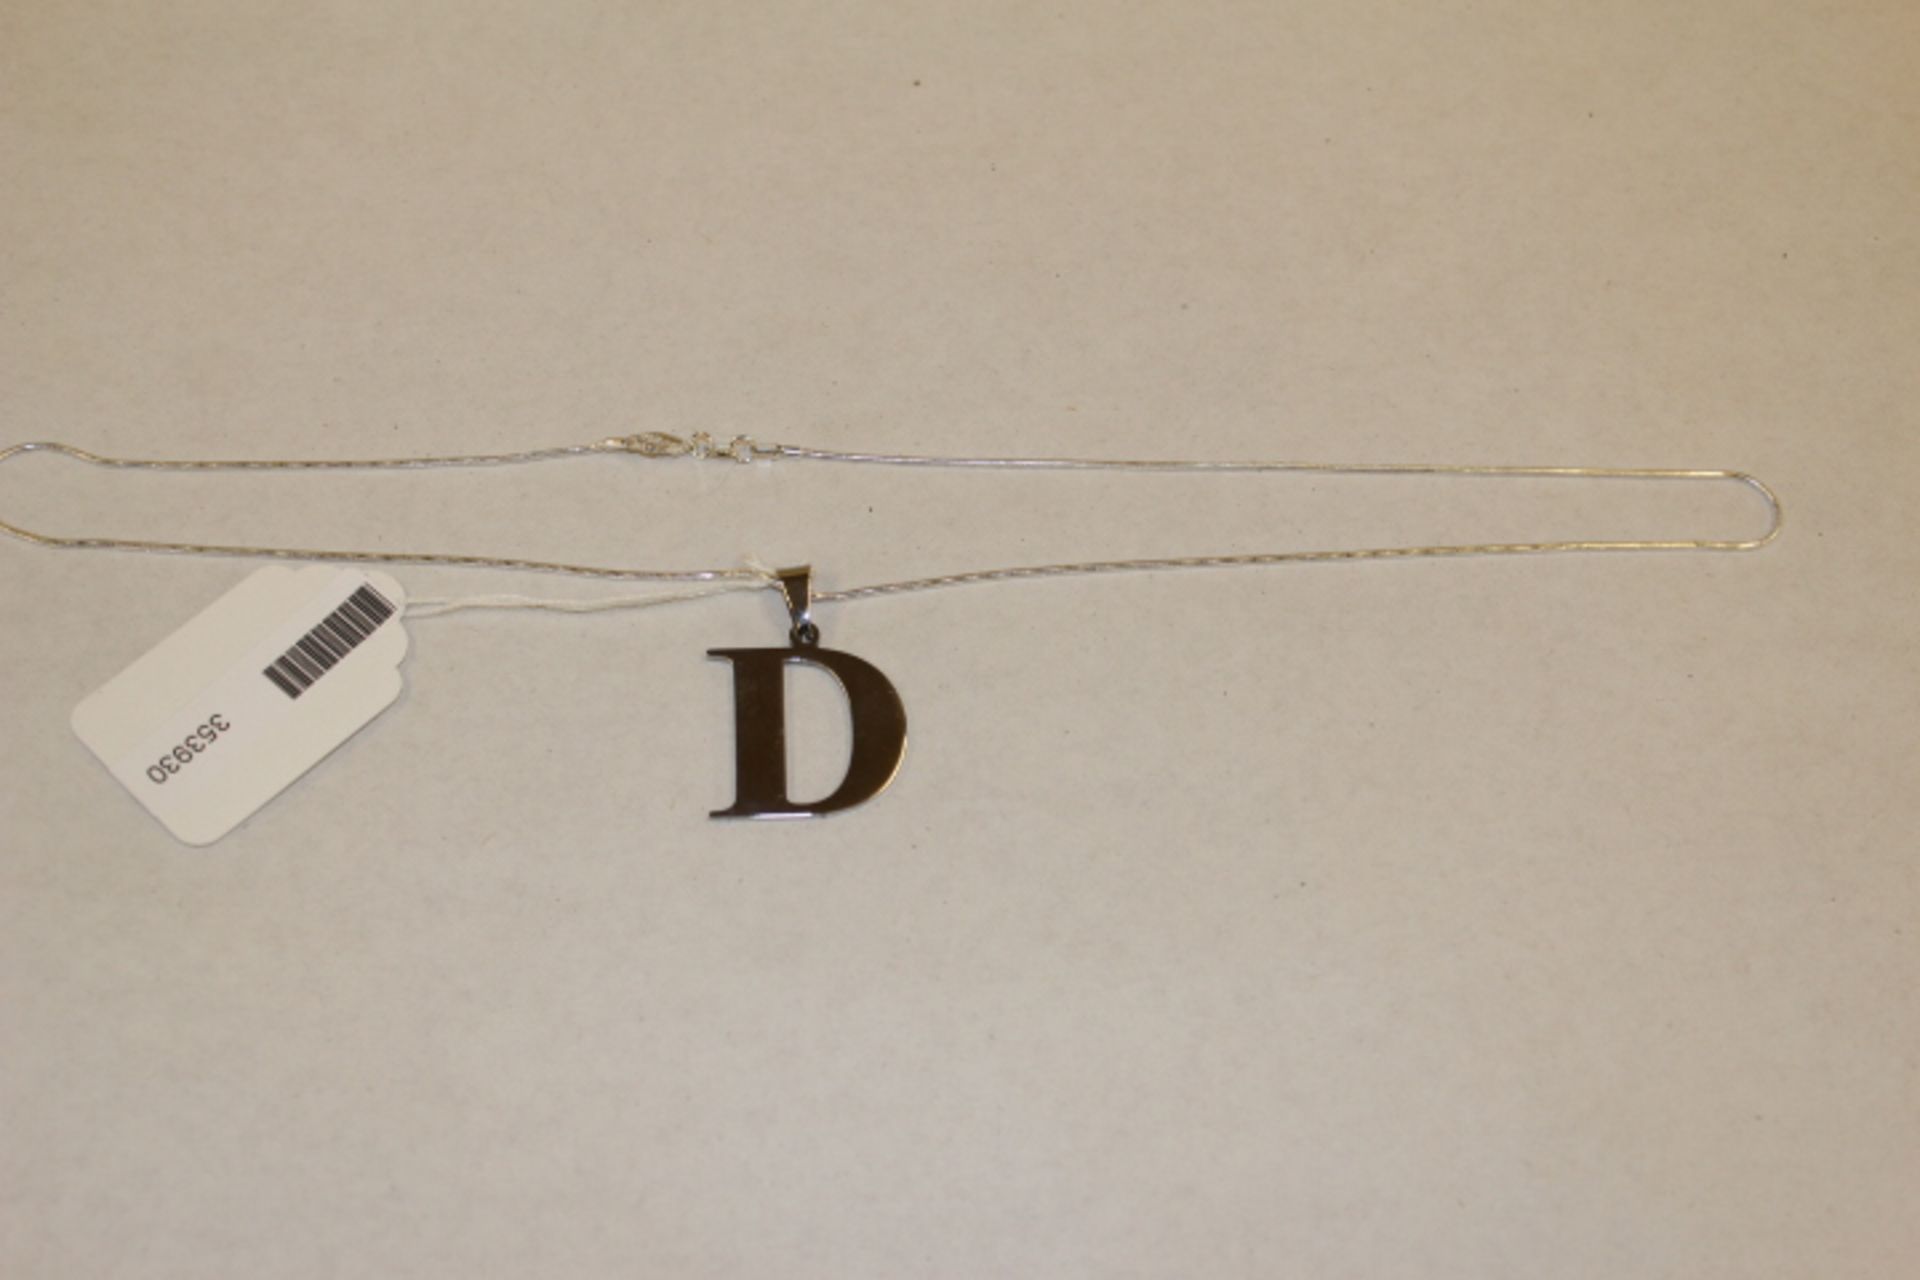 WM Necklace With "D" Pendant